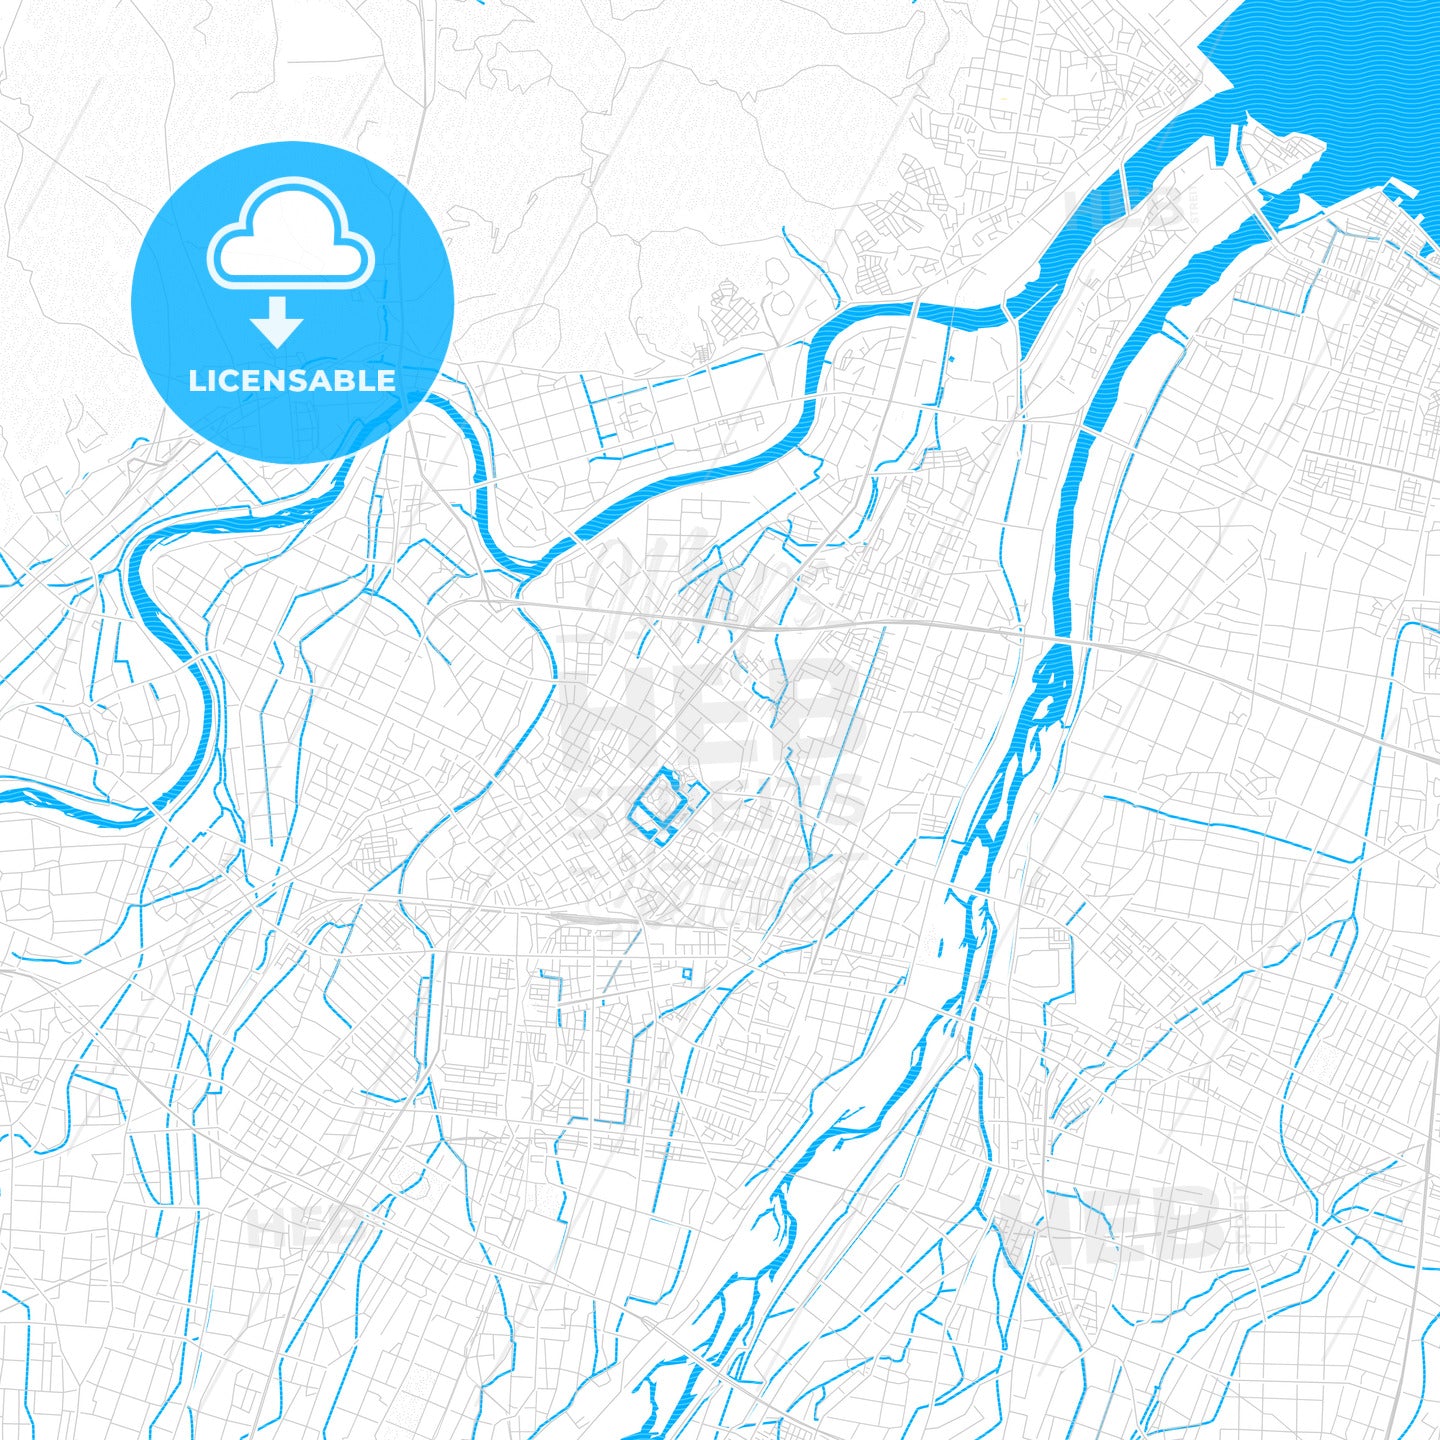 Takaoka, Japan PDF vector map with water in focus